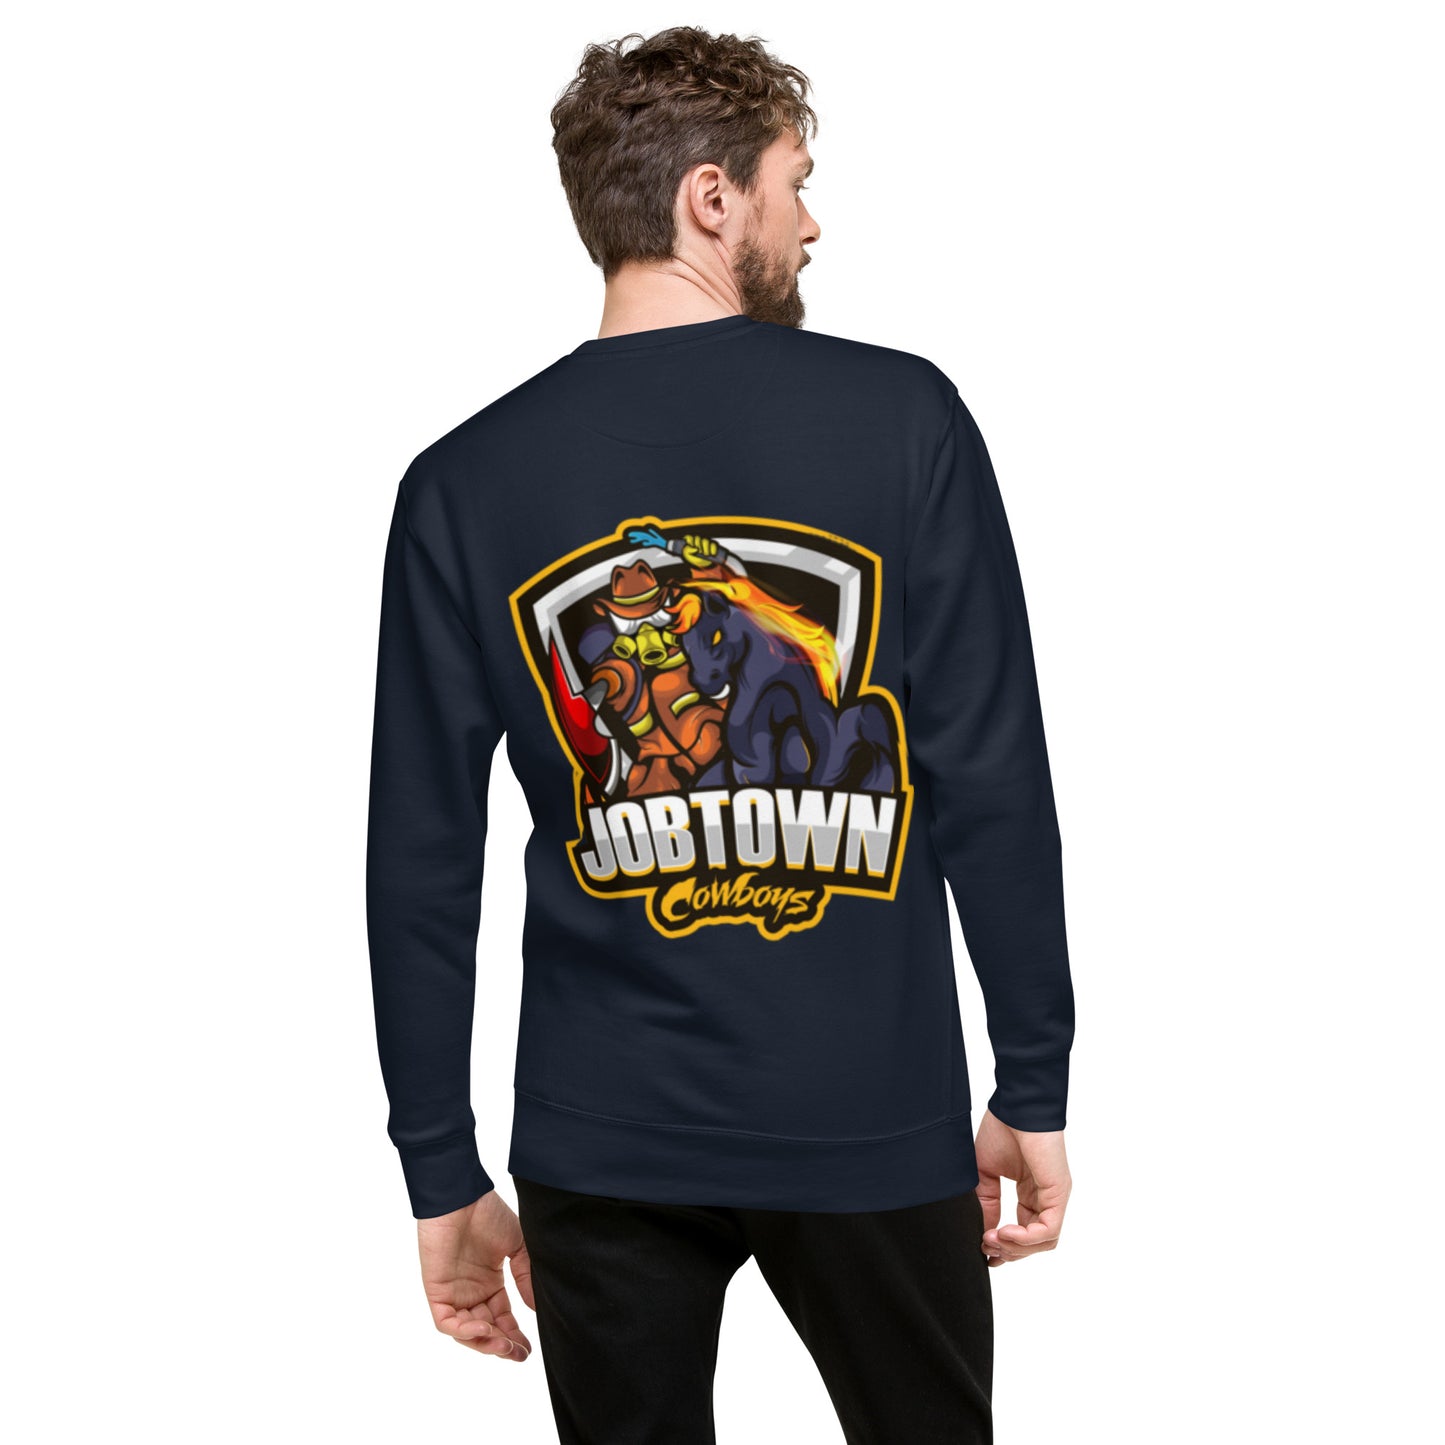 The Jobtown Cowboys Firefighter Premium Sweatshirt